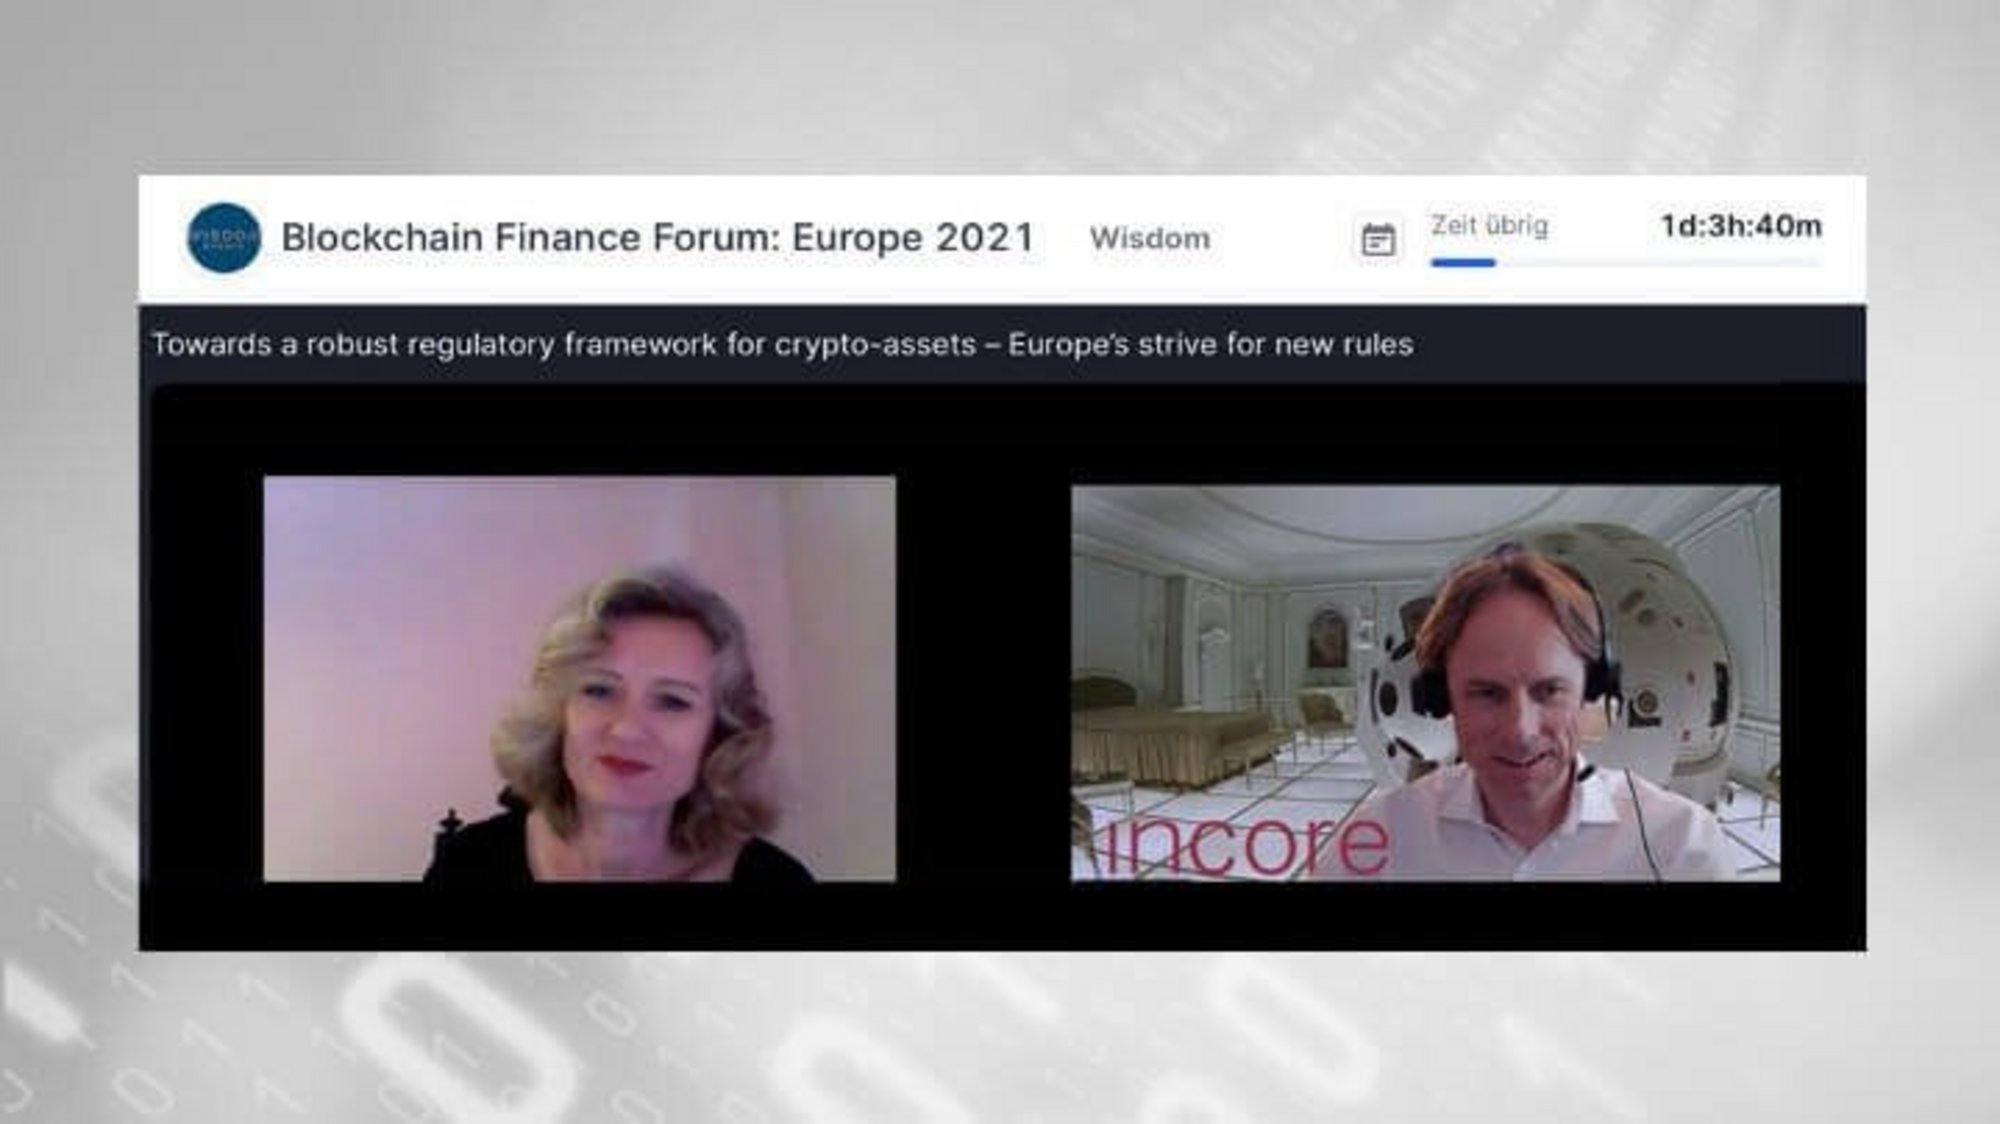 InCore Bank am Blockchain Finance Forum: Europe 2021